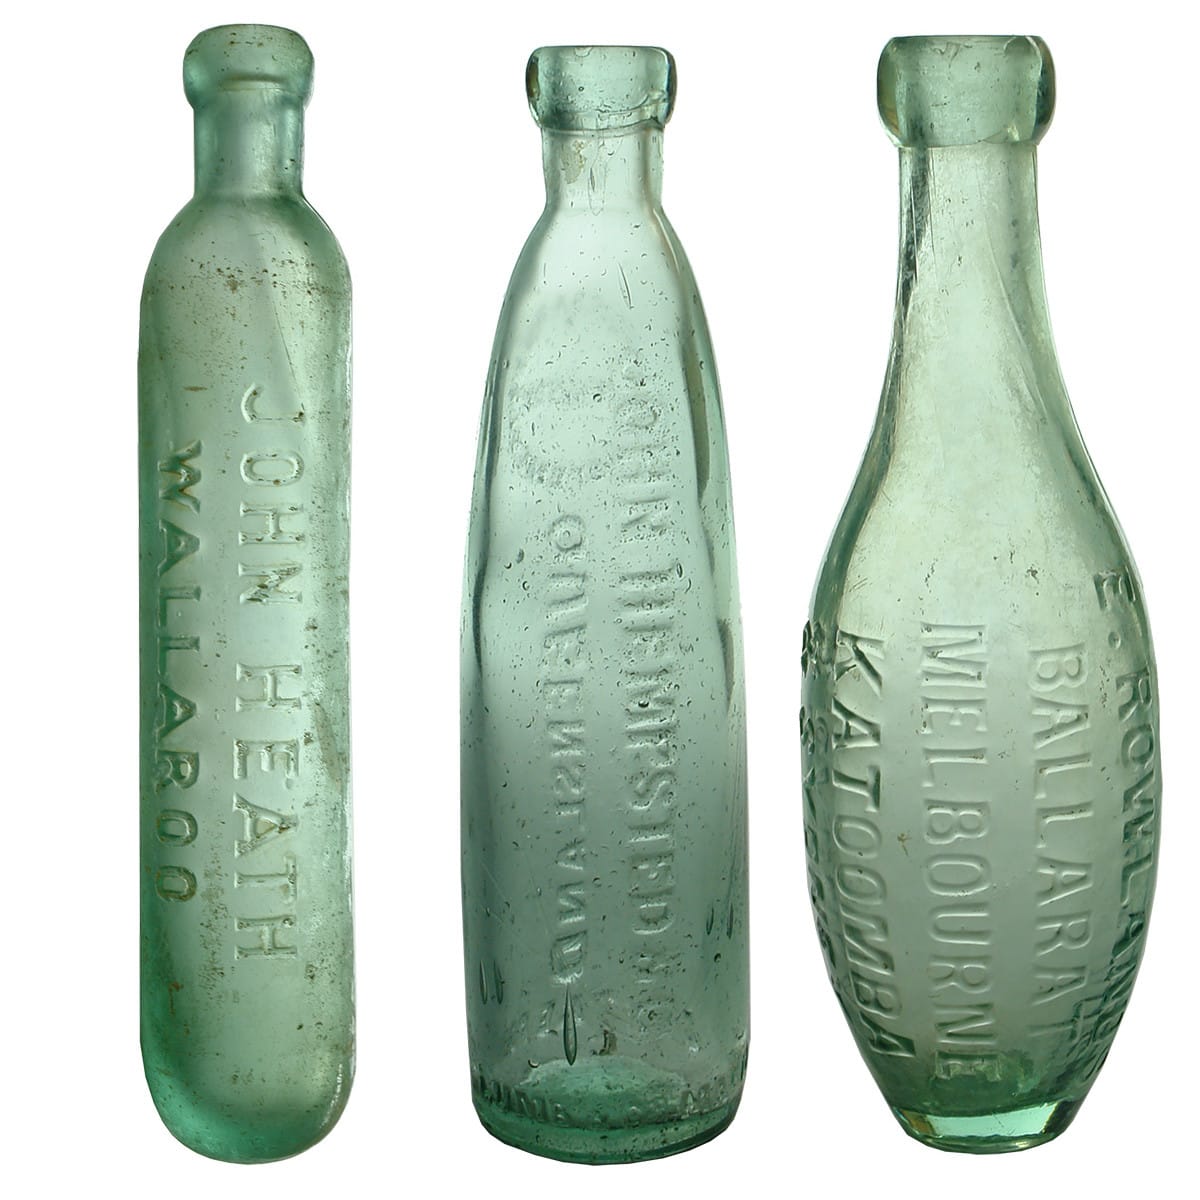 3 Aerated Waters: John Heath Wallaroo maugham; John Hempsted & Co Queensland stick bottle; E. Rowlands skittle.